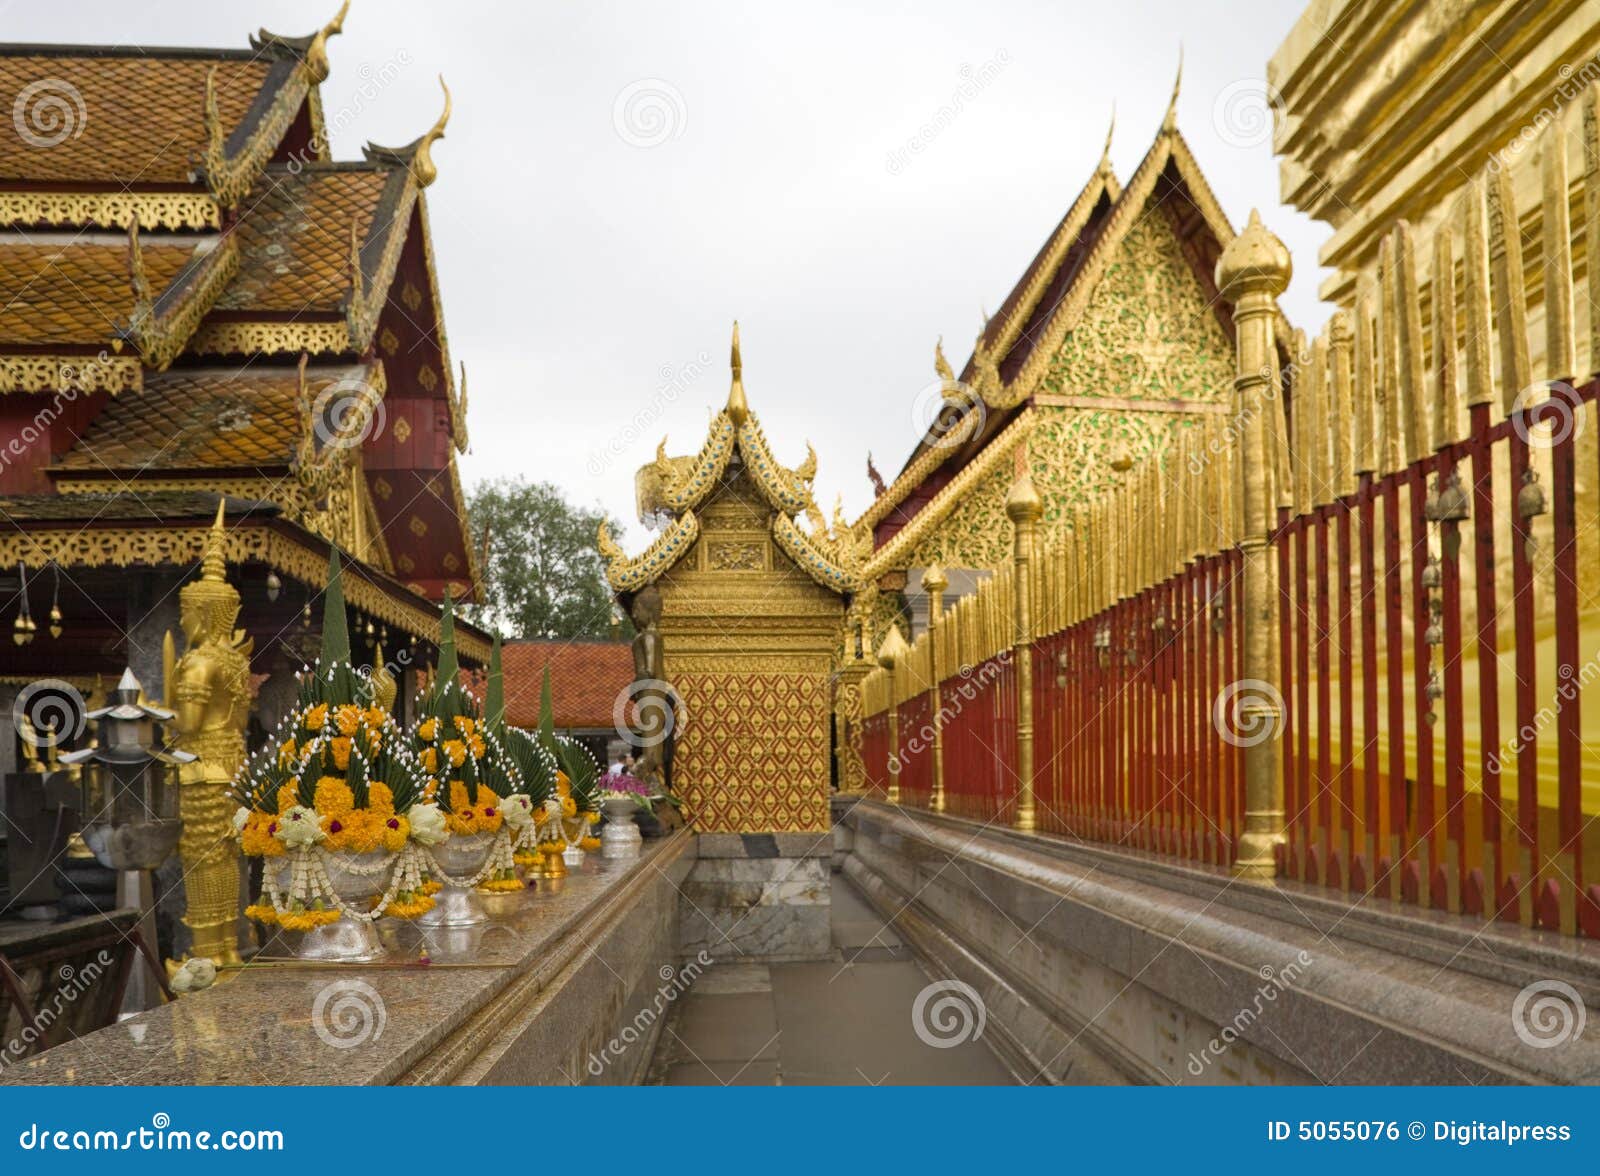 doi suthep, temple in chiang mai, thailand